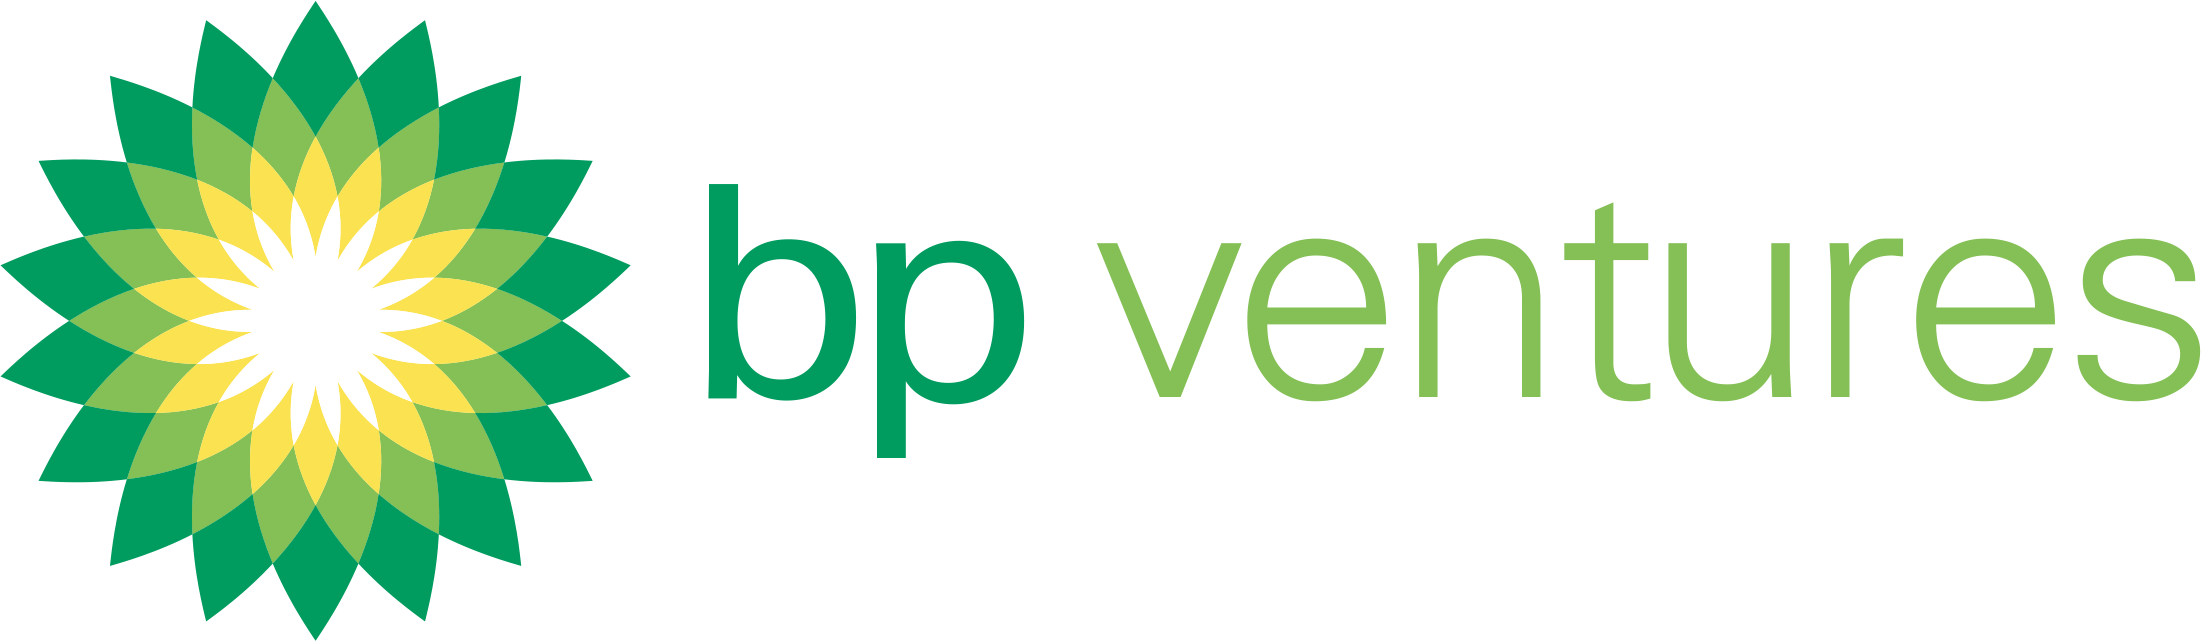 Bp Ventures Logo